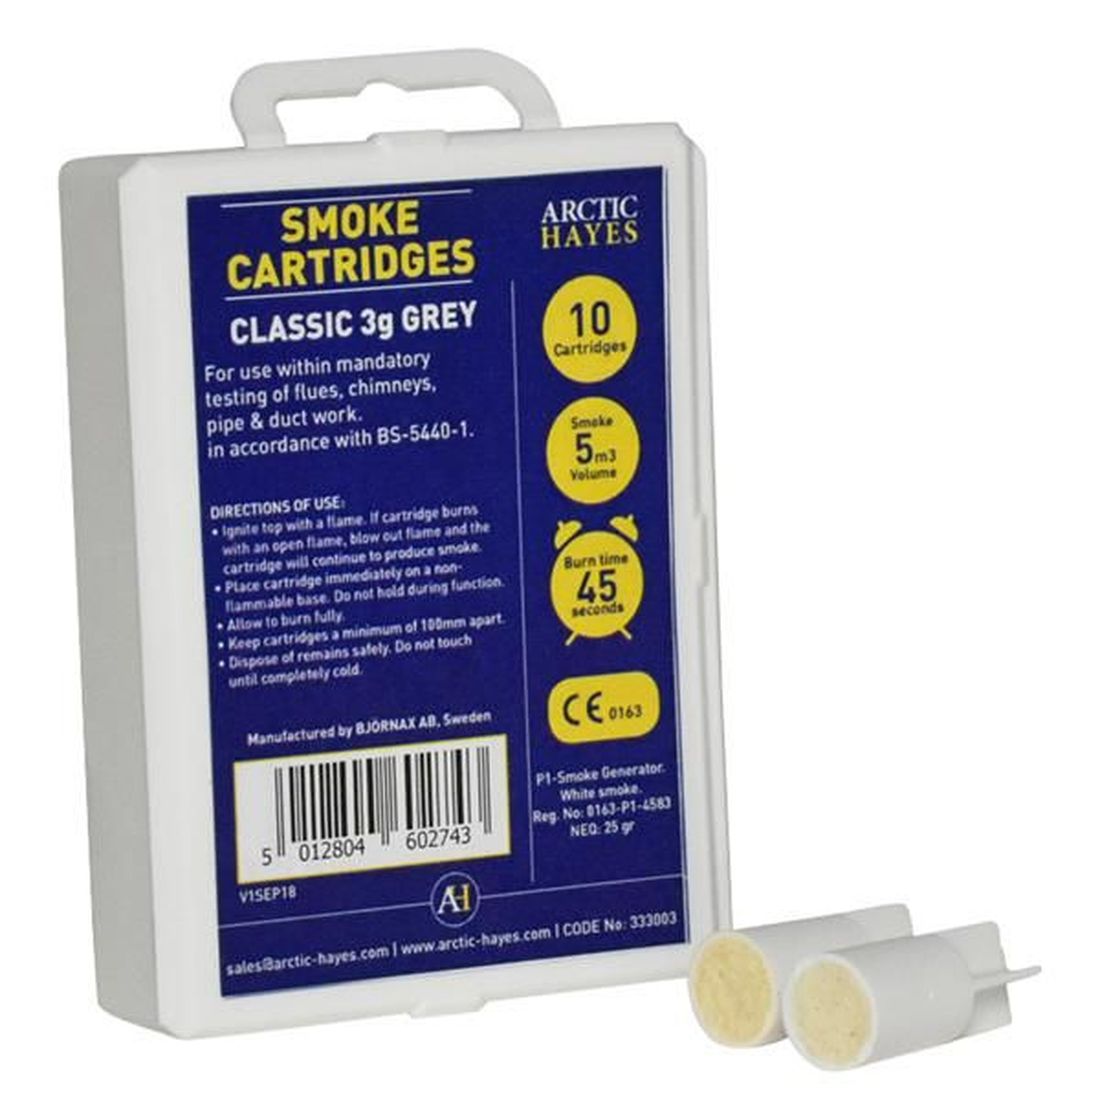 Arctic Hayes Smoke Cartridges Classic 3g Grey (Pack 10)                                      